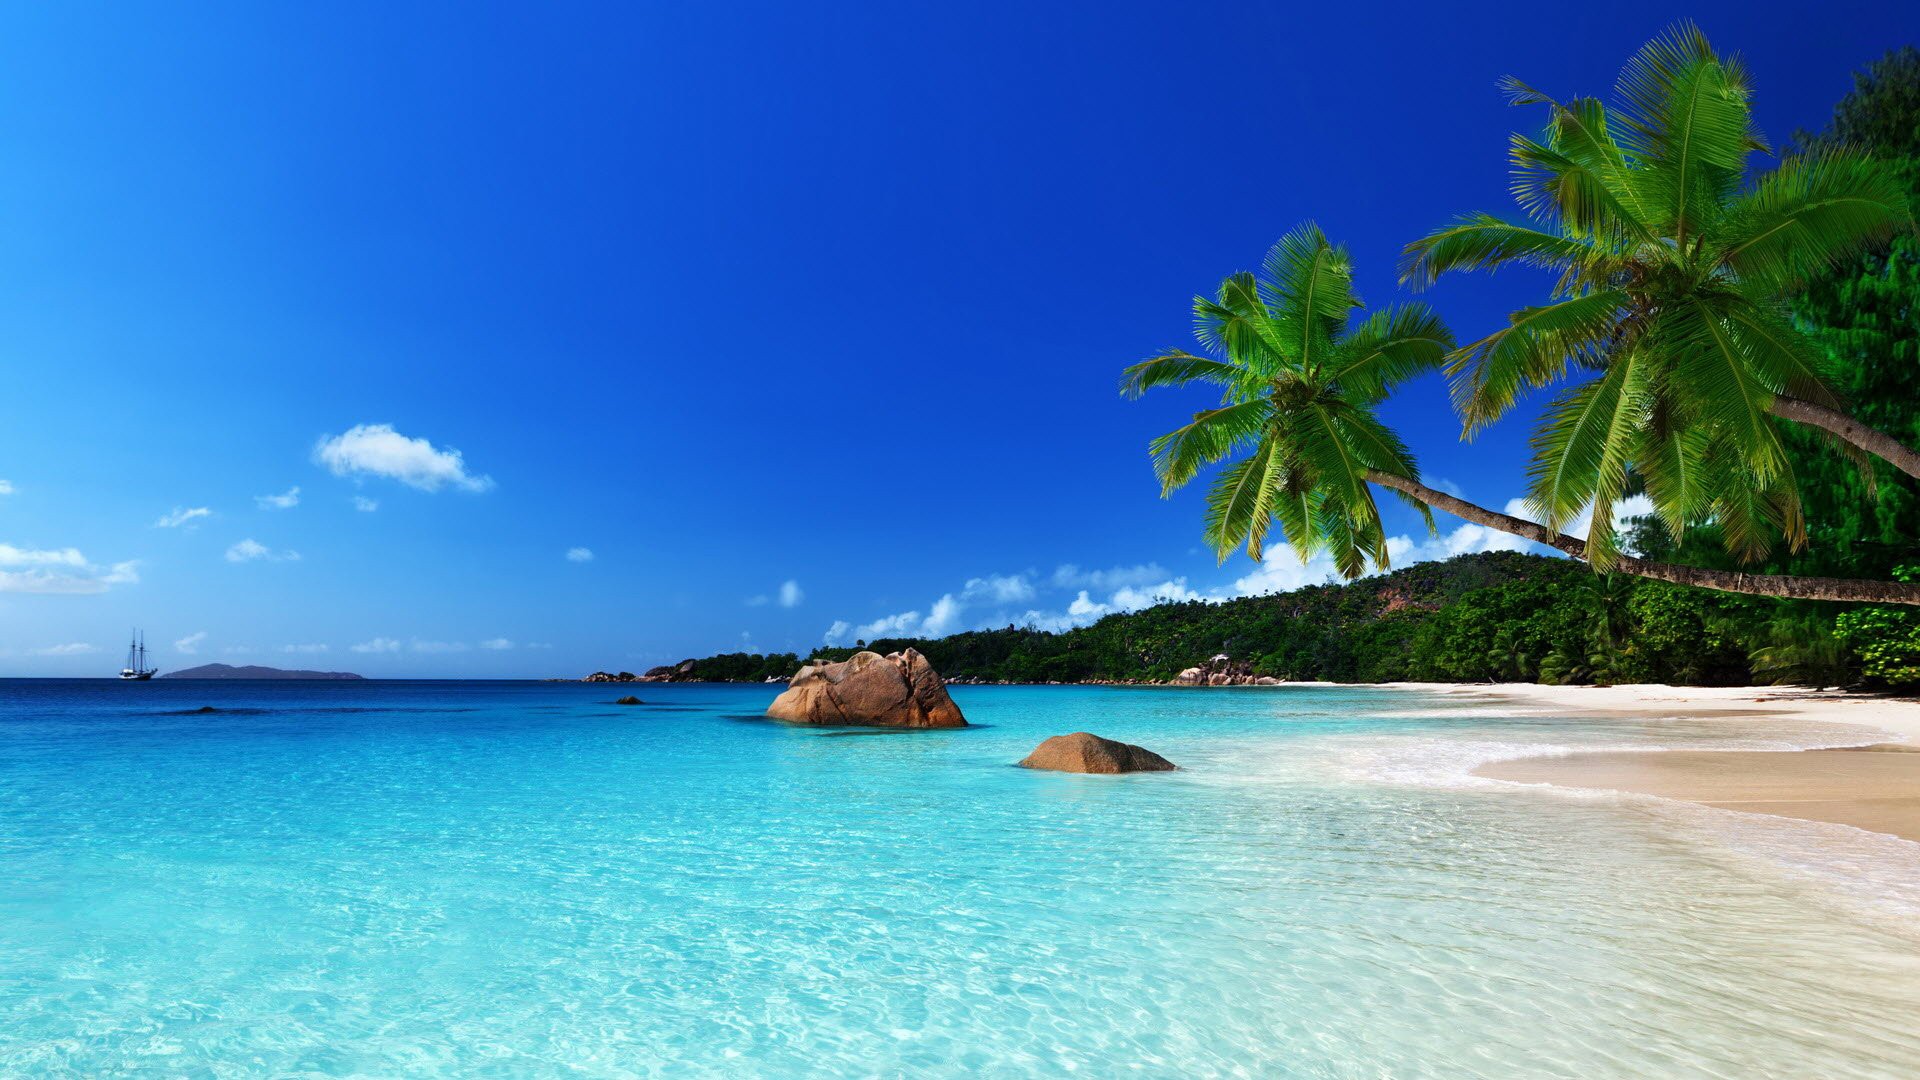 Amazing Tropical Beach Image Wallpaper Background Photos